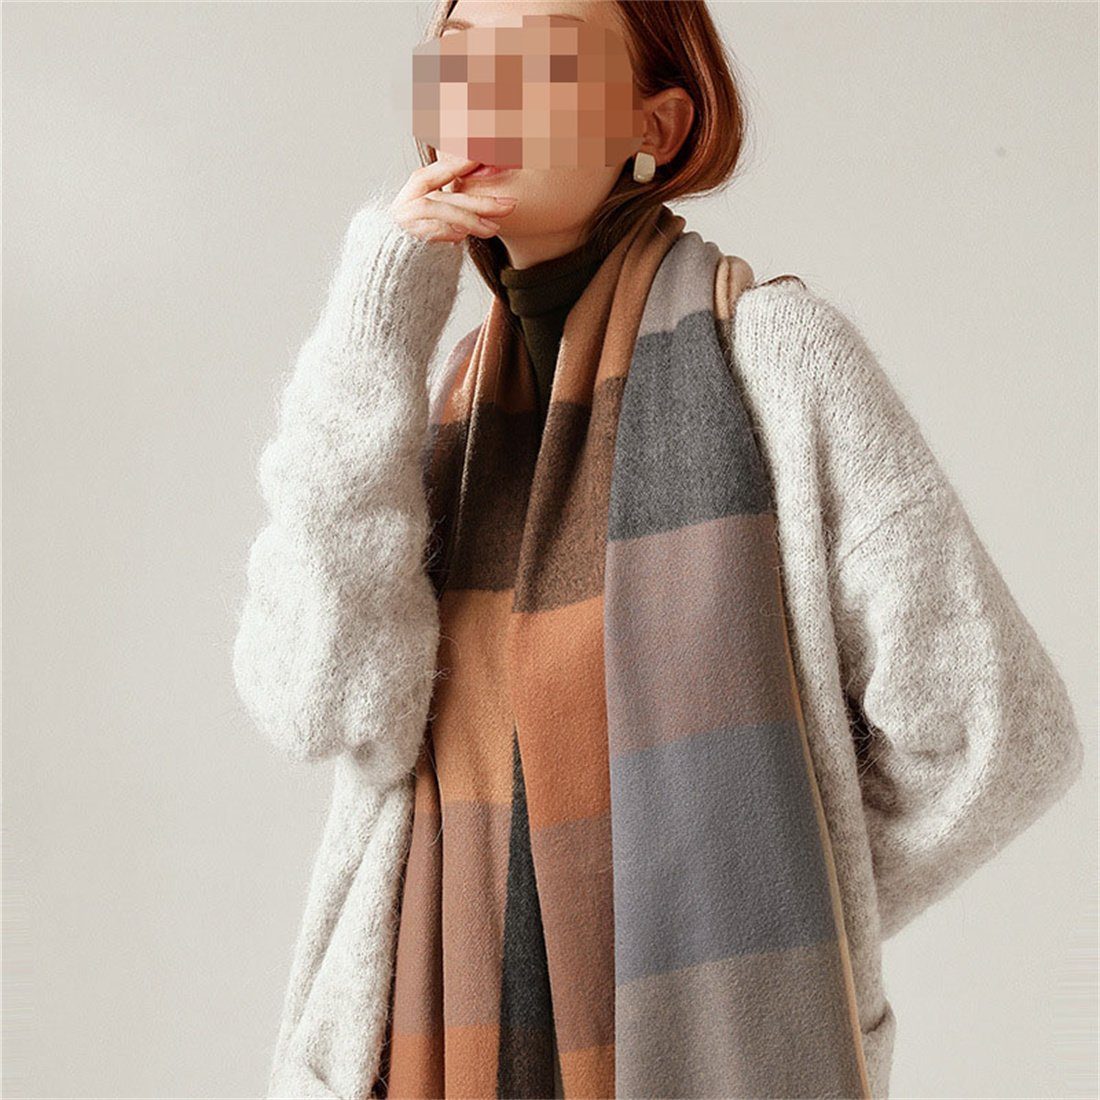 DÖRÖY Modeschal Schal quadratischen Damen Beige Schal, gestreiften Warm Vintage Winter